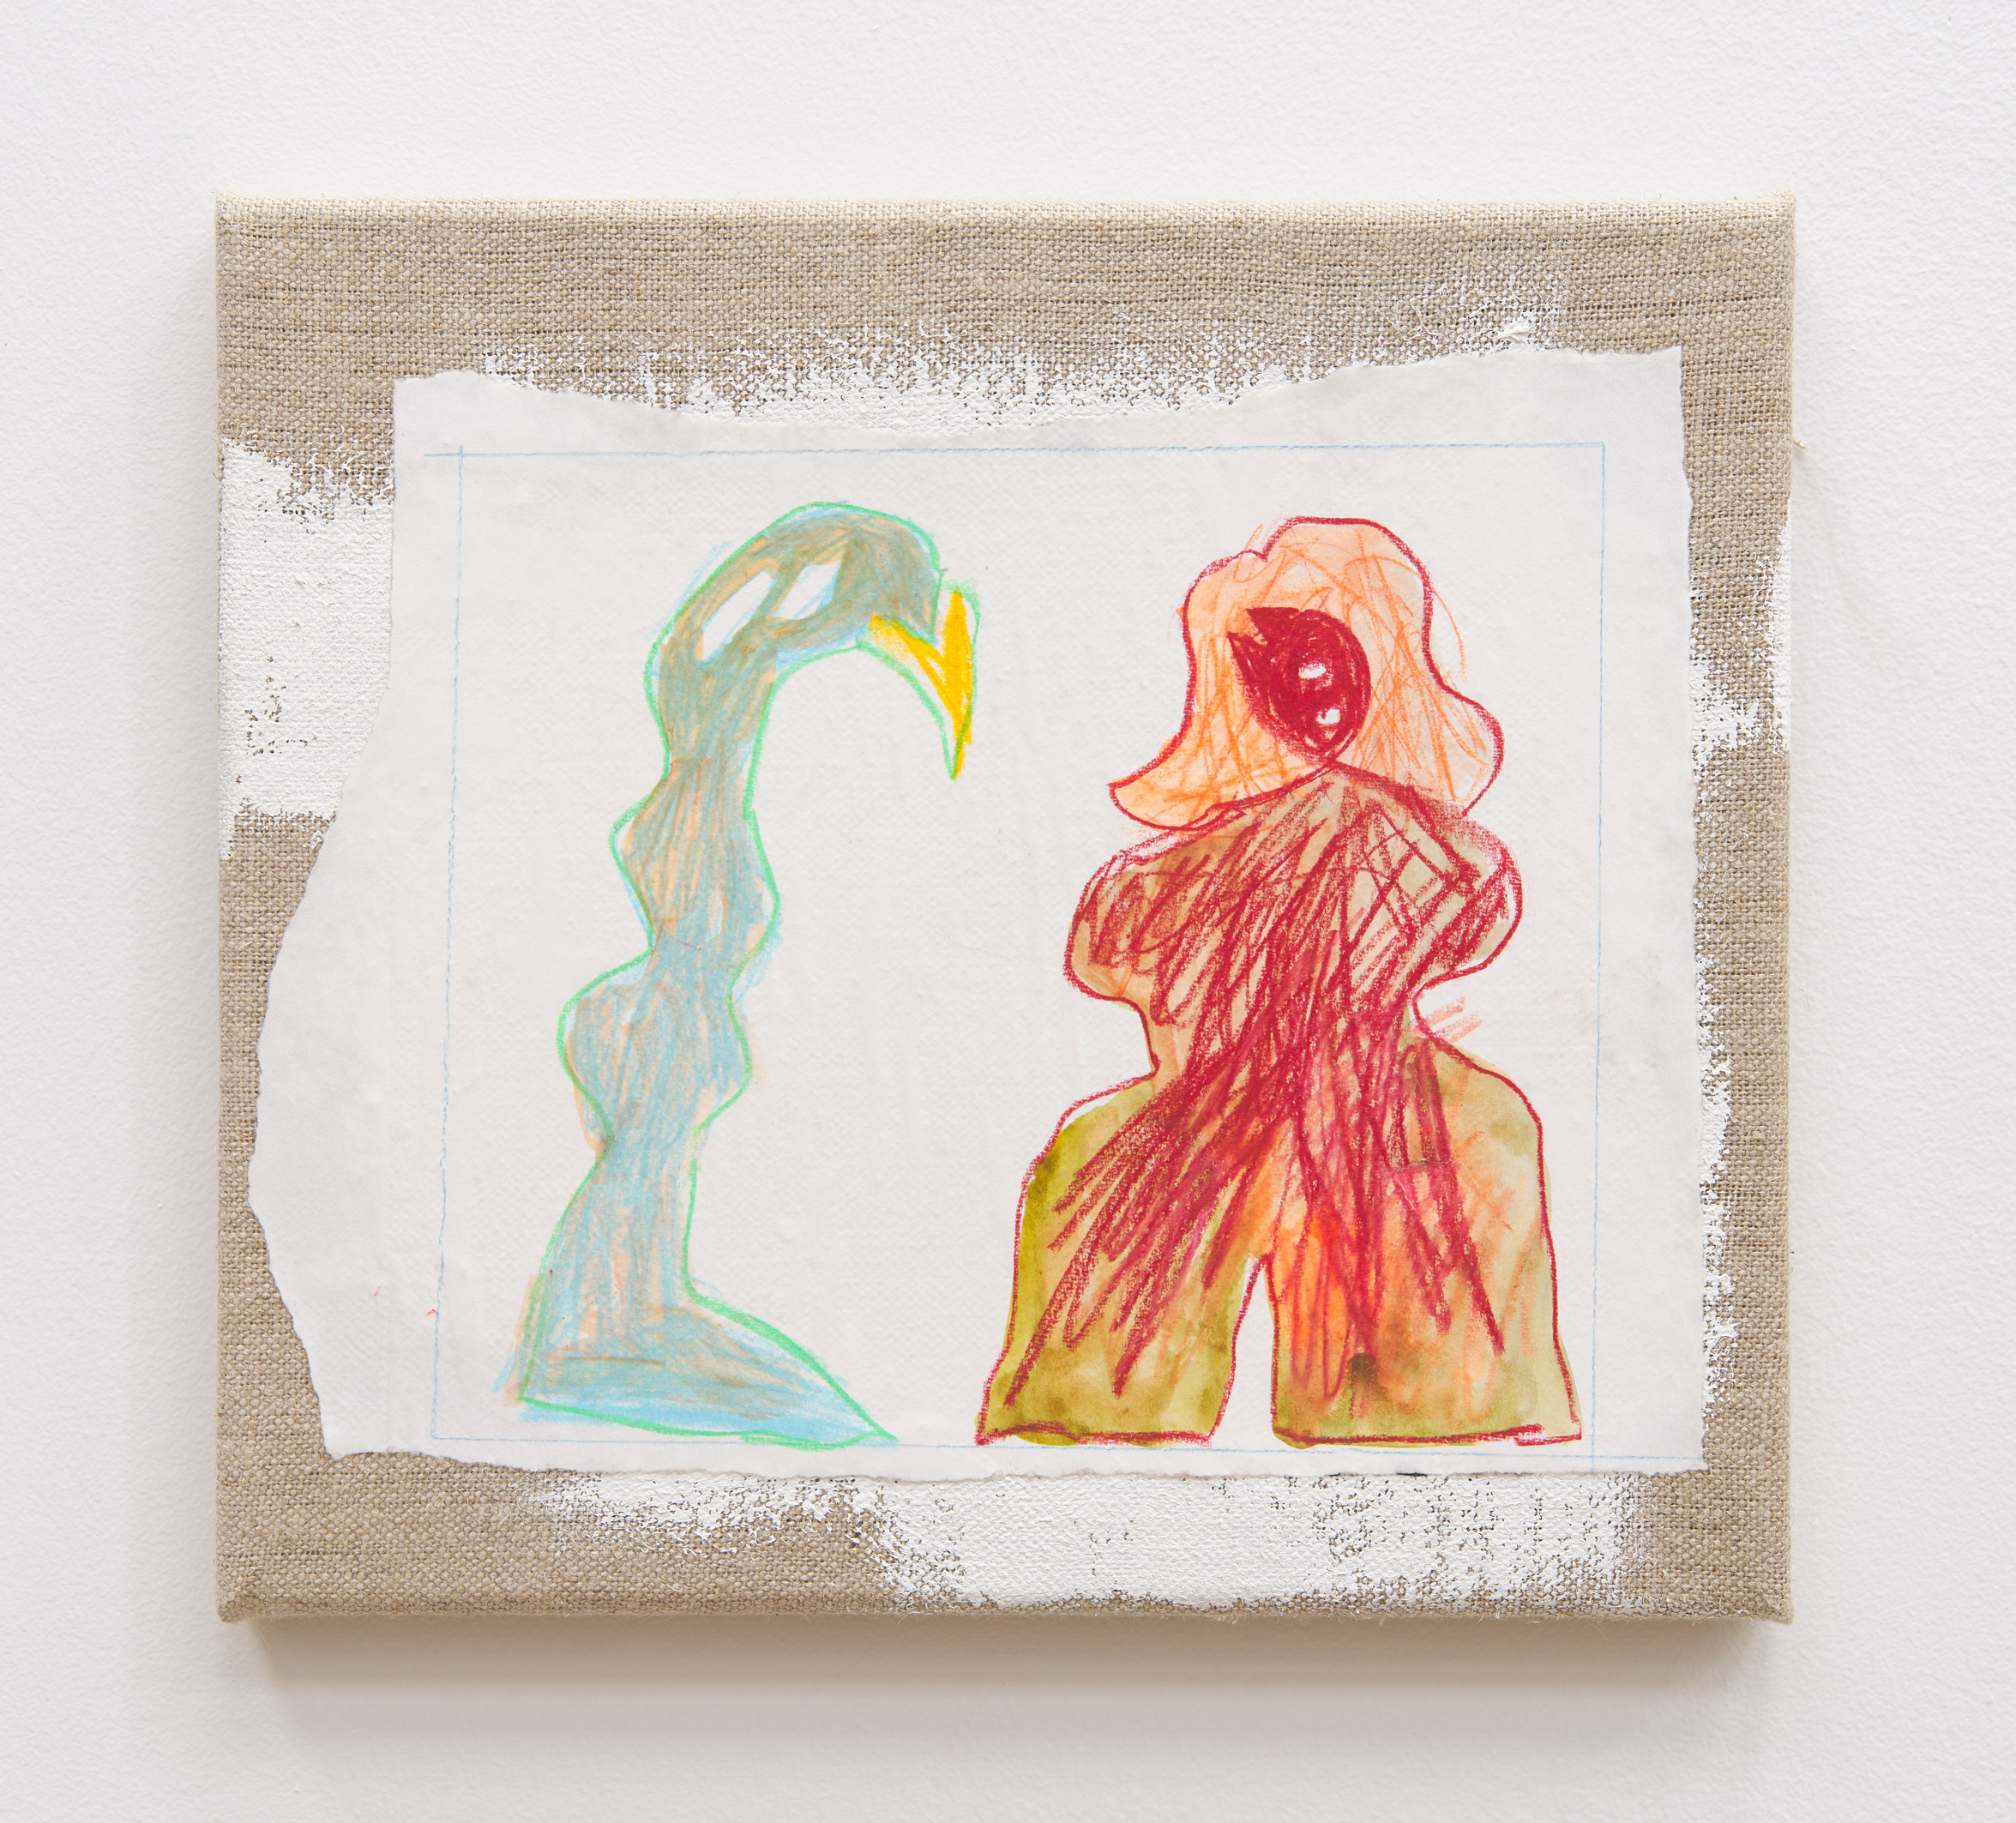 Daniel Boccato, parrotpainting, 2021, Colored pencil, gesso, linen, paper, pva adhesive, watercolor, wood, 9 x 10 x 1 in.